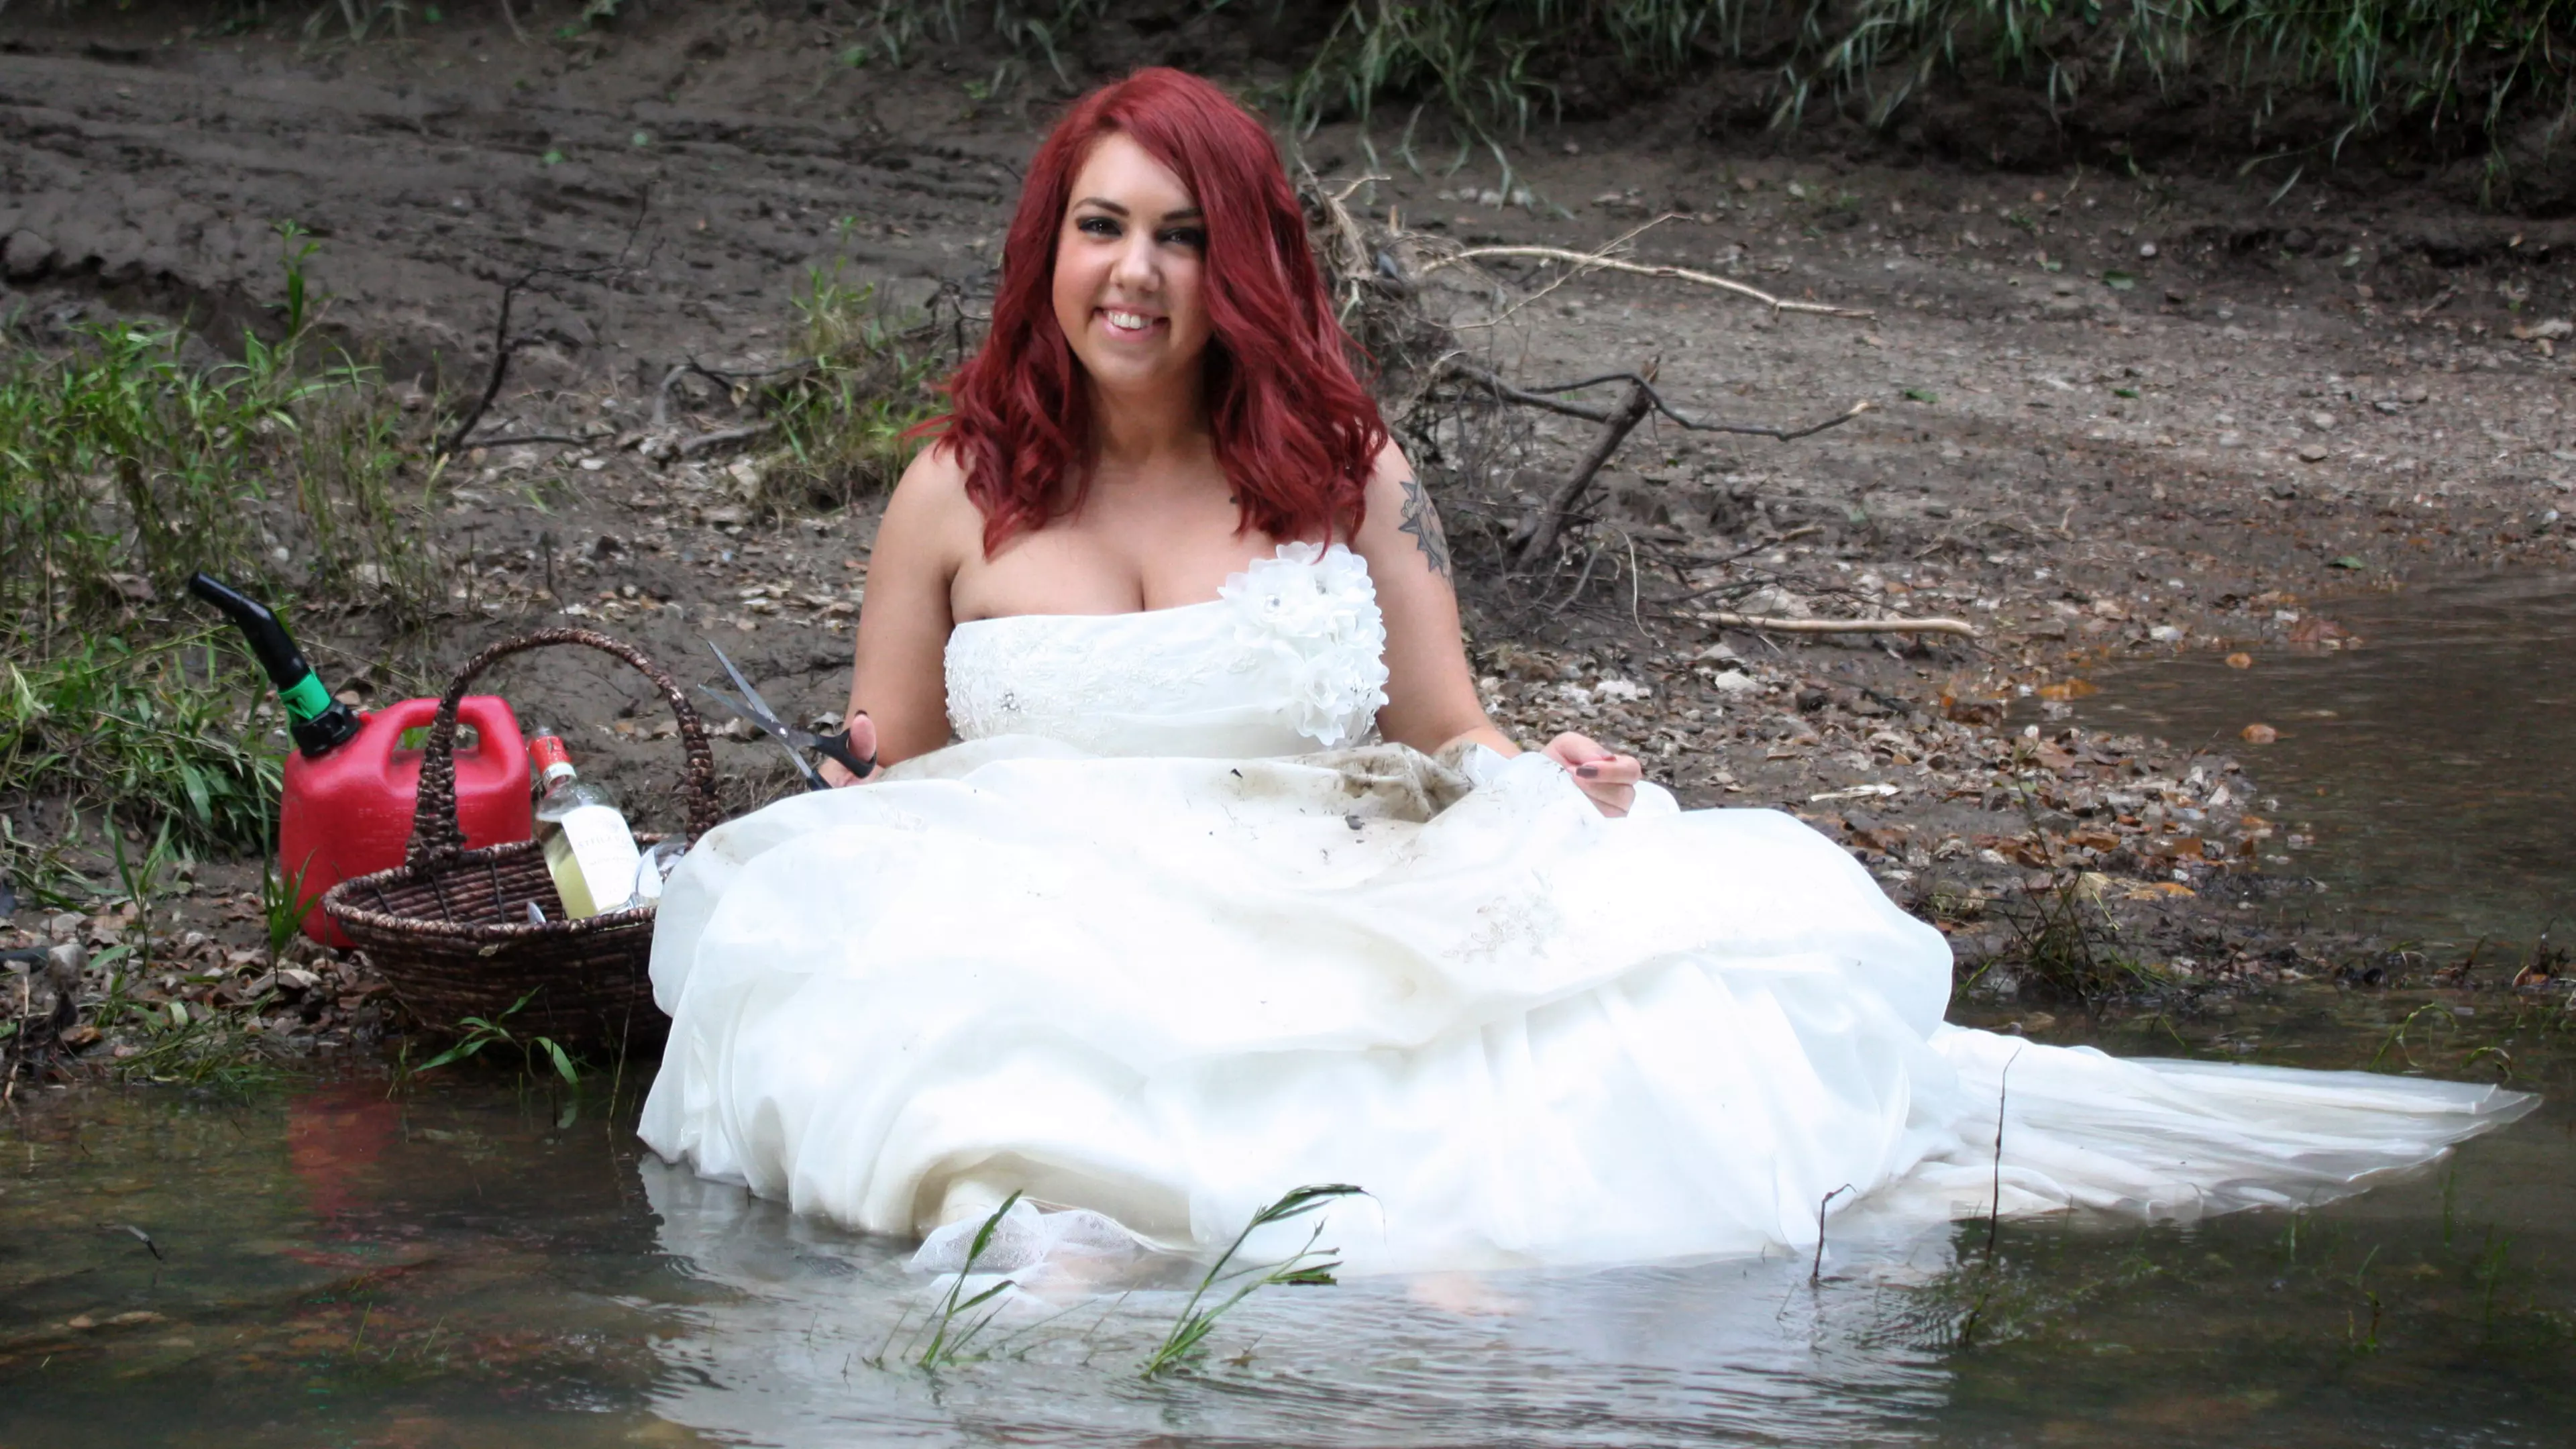 Woman Throws Empowering Divorce Shoot As She Burns Wedding Dress